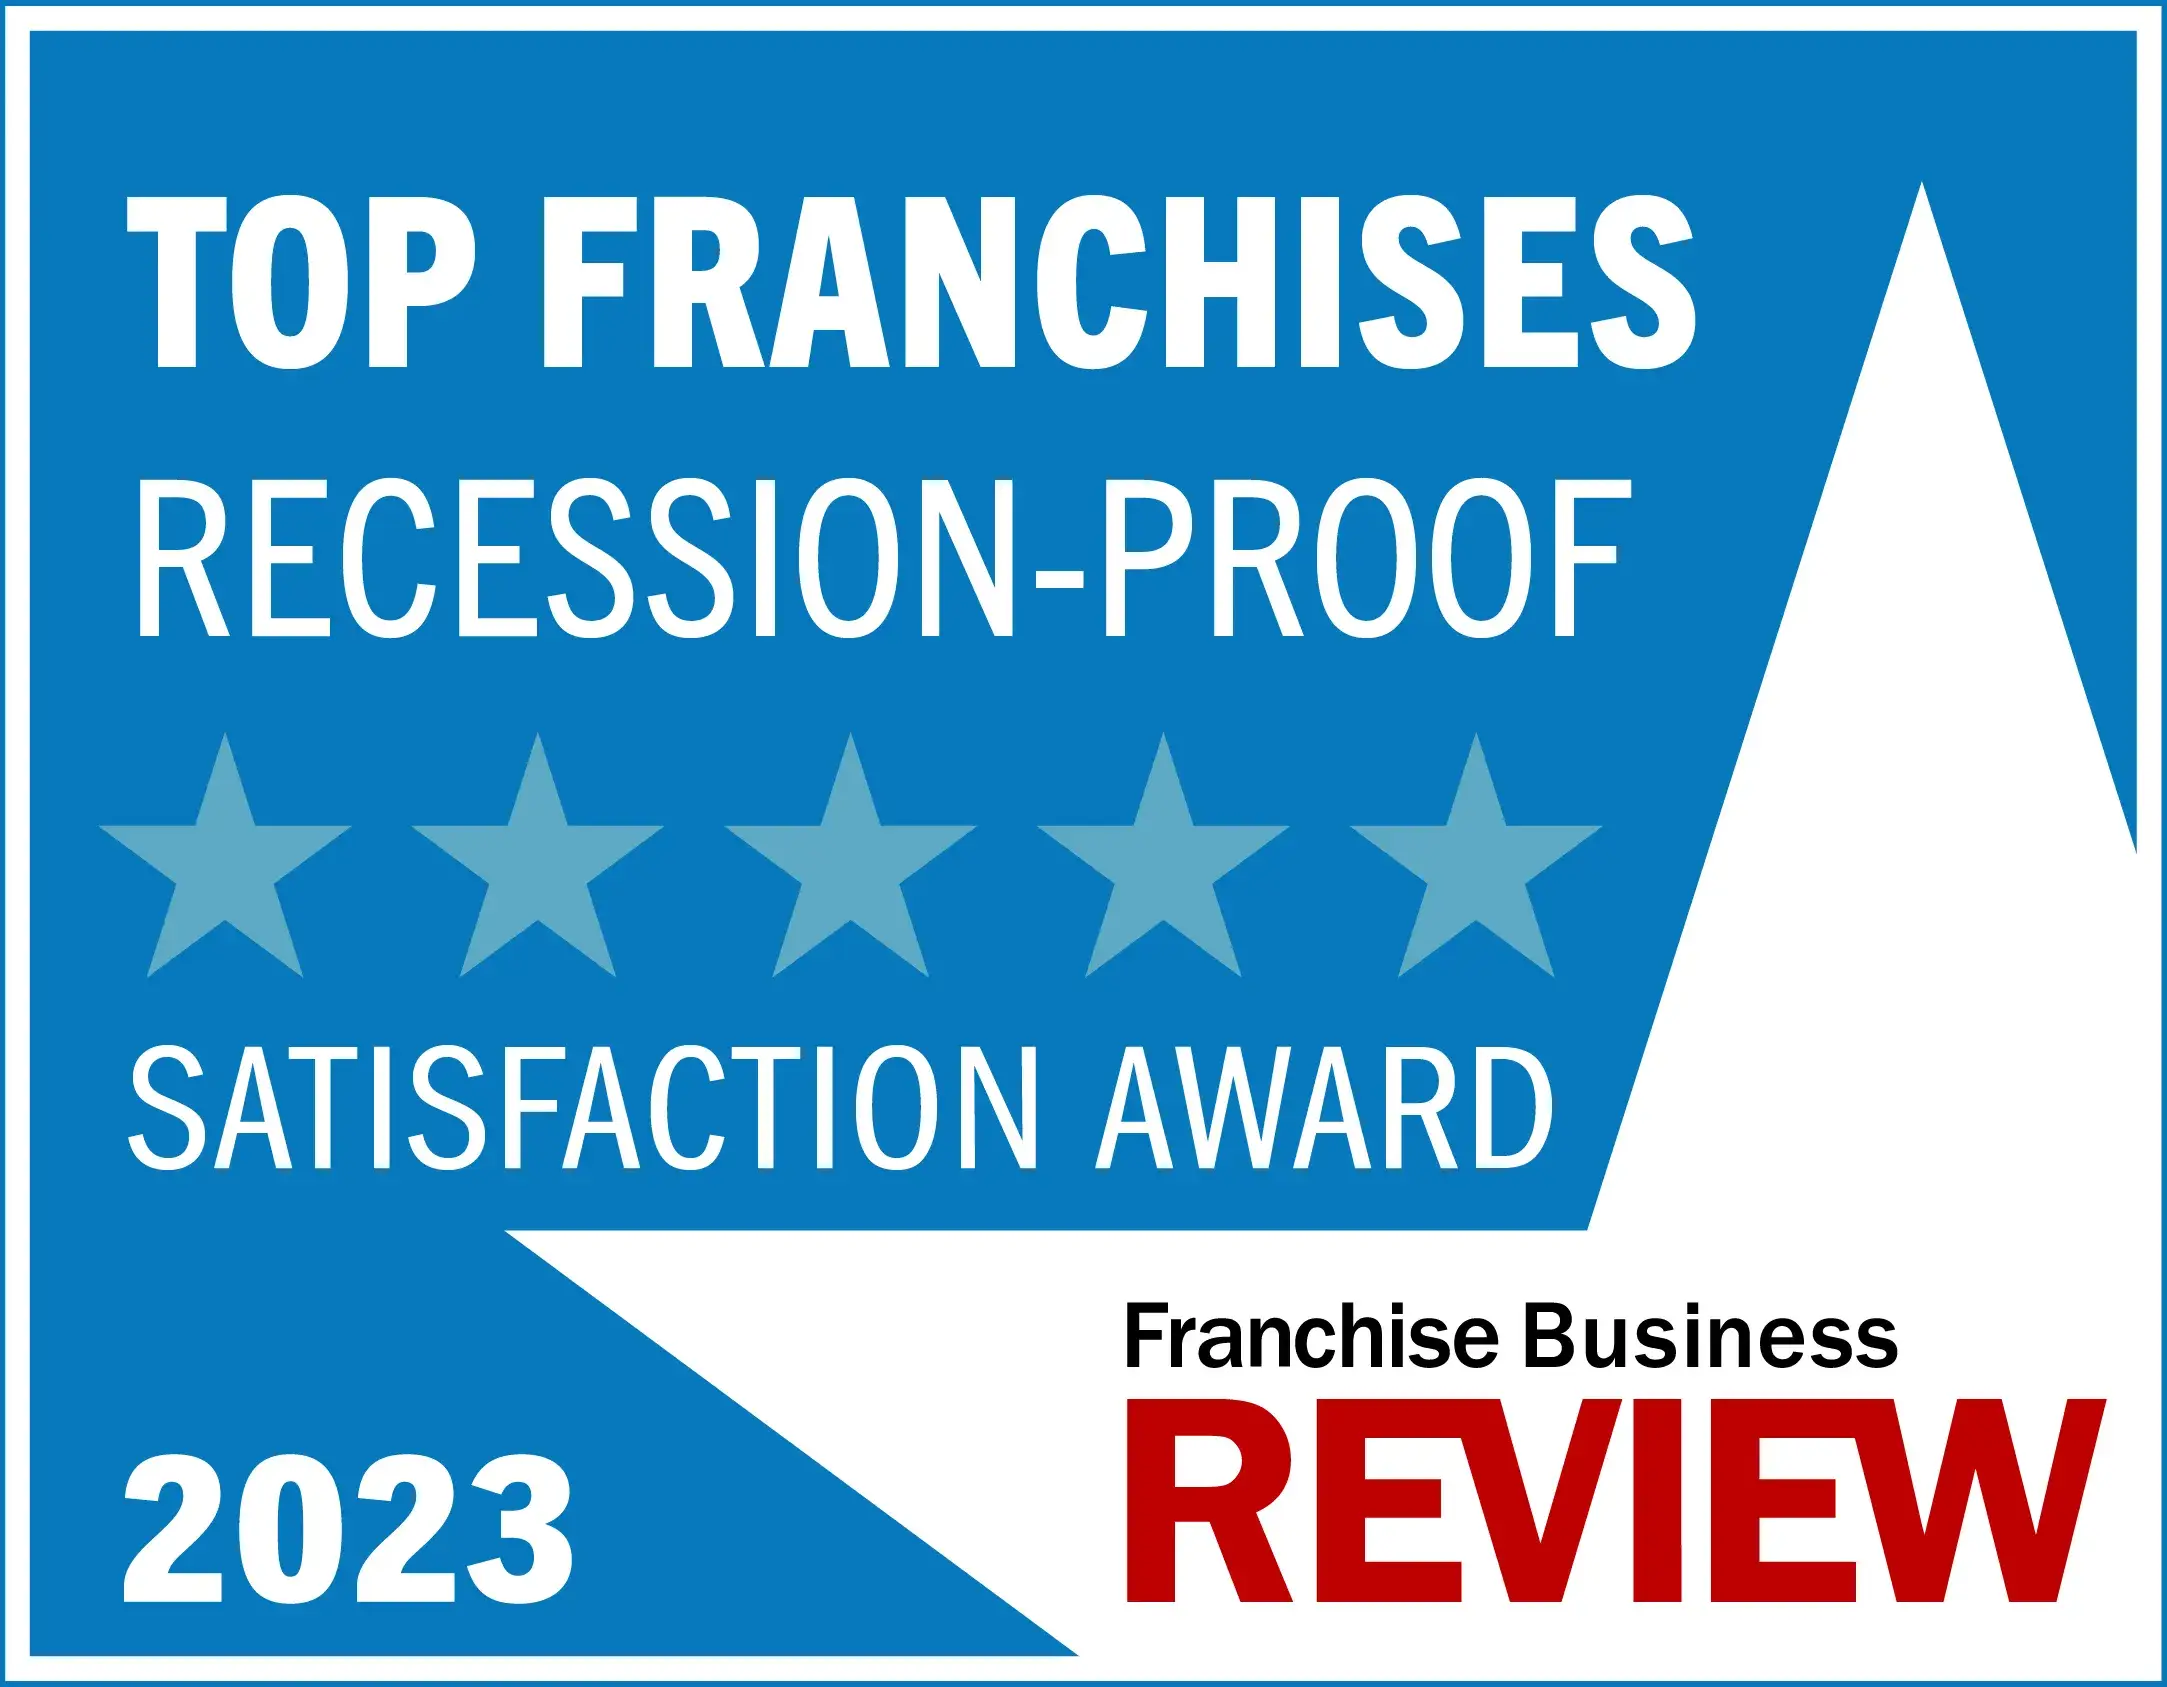 Franchise Business Review Recession-proof Franchises 2023